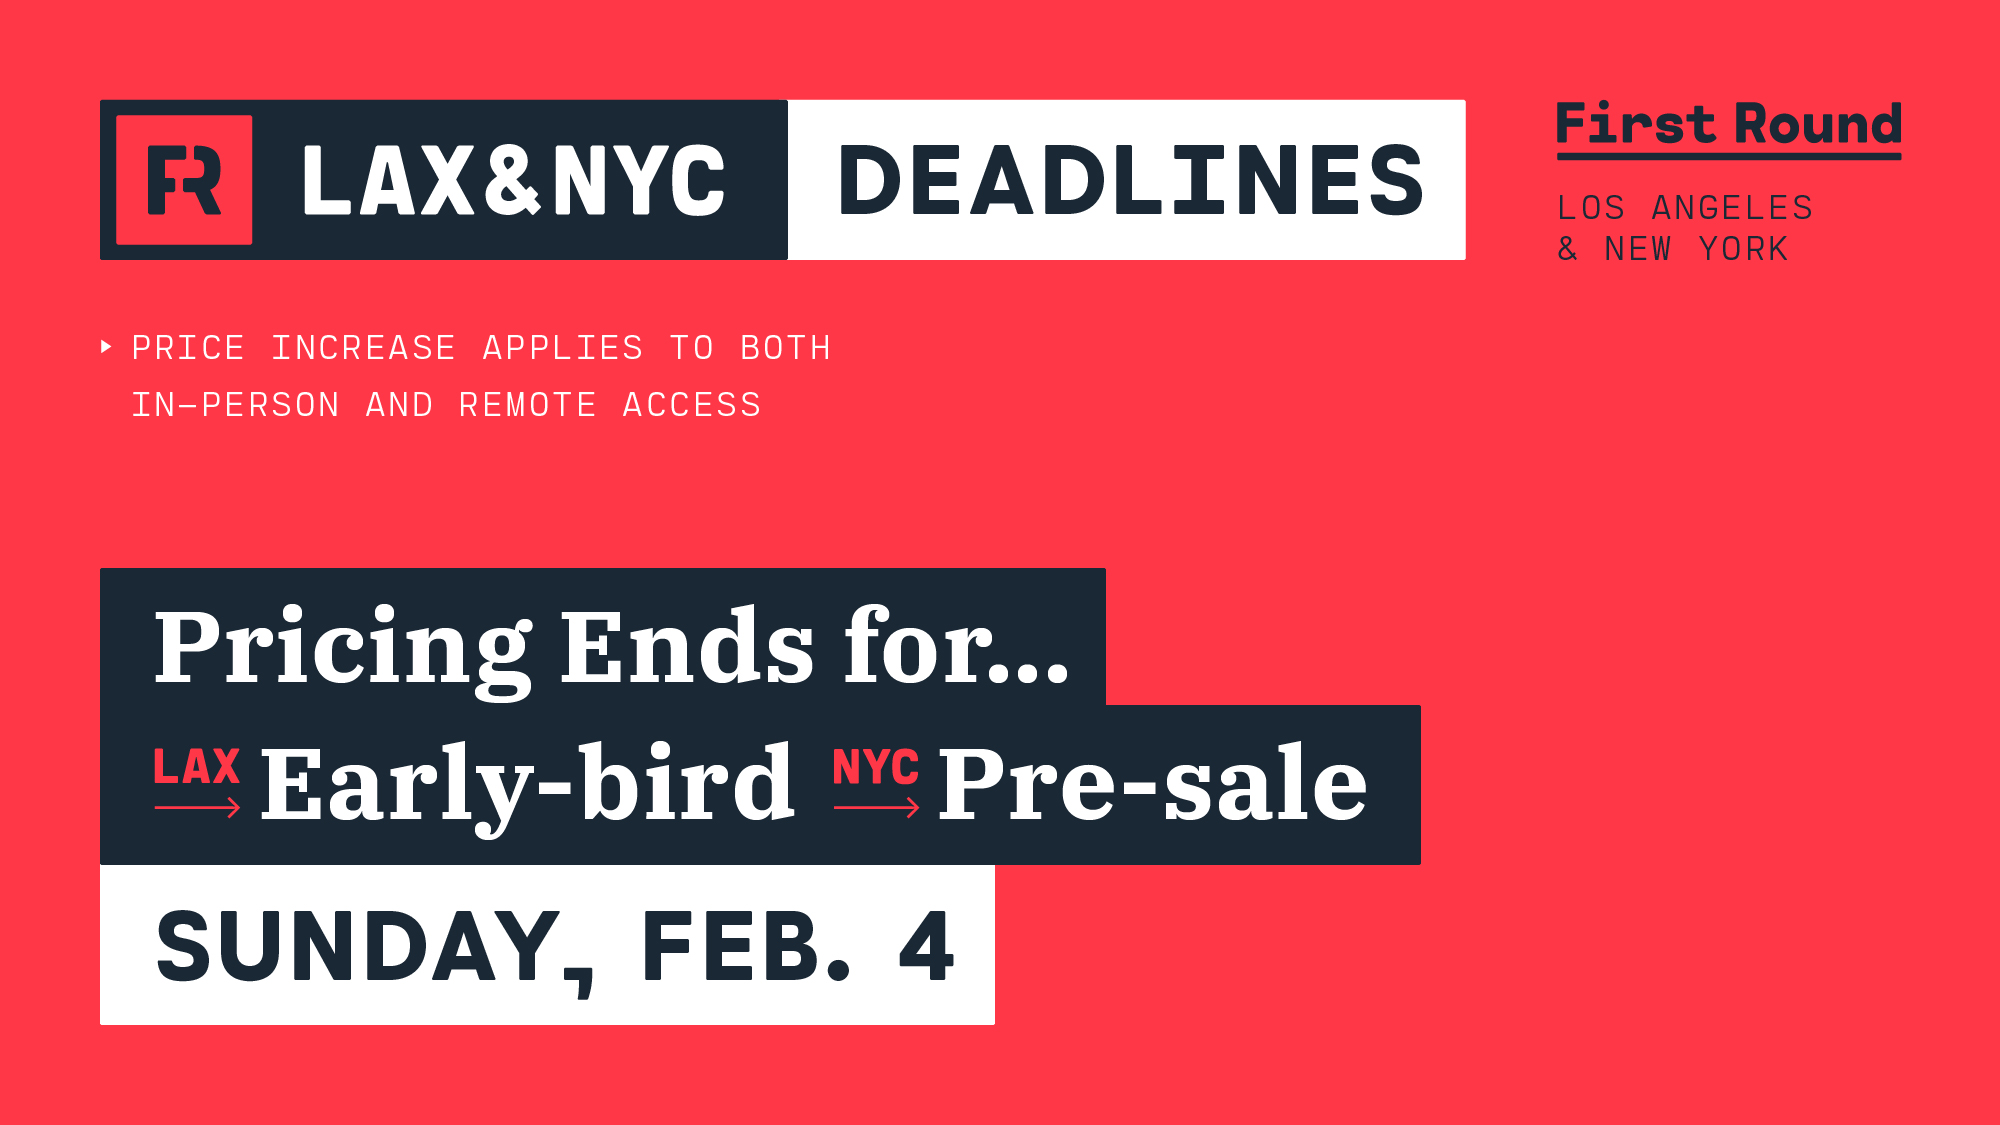 First Round LAX & NYC: Deadline this Sunday